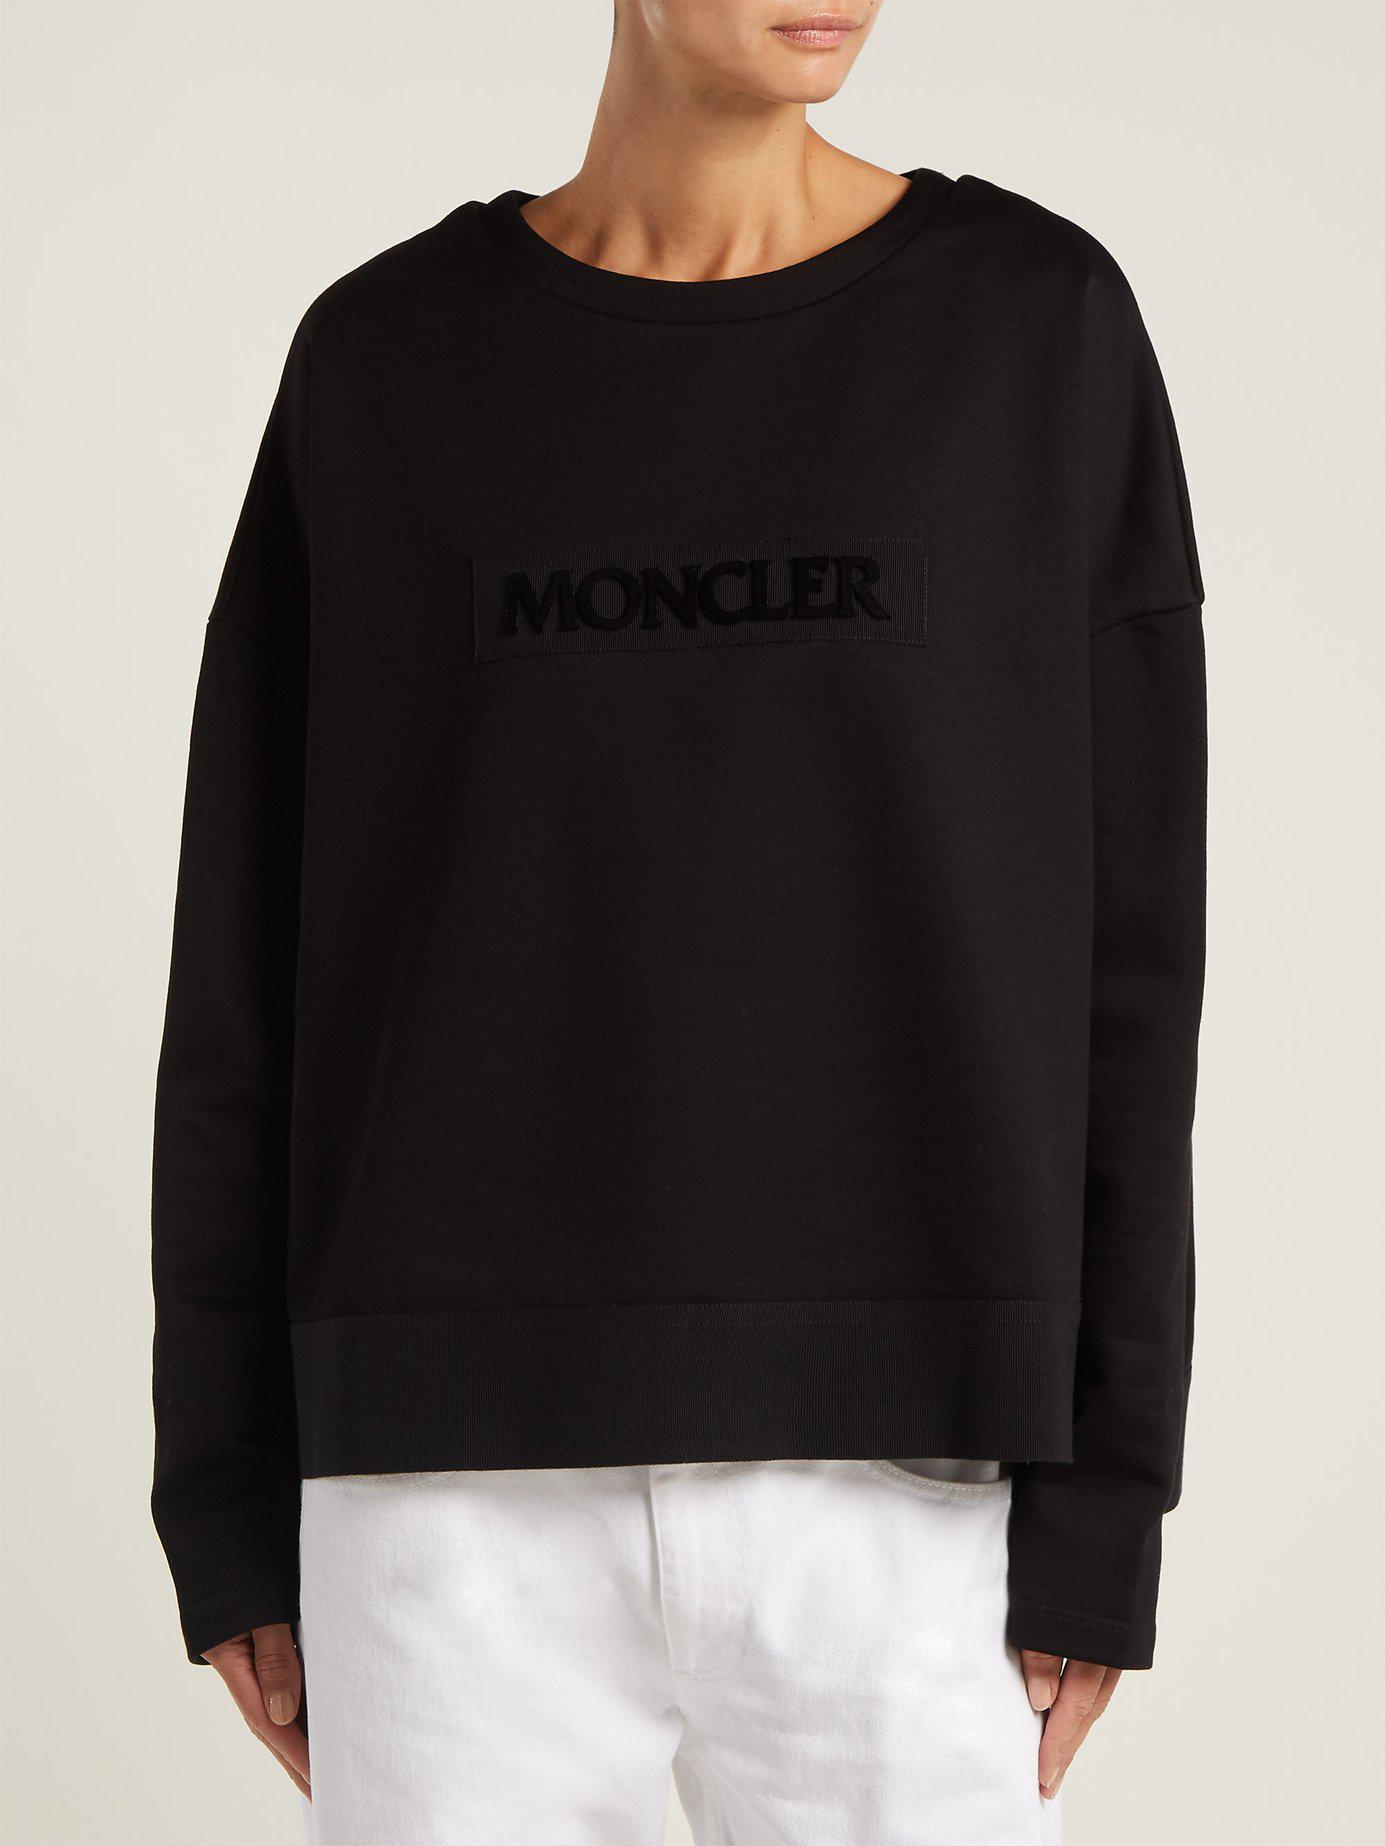 Moncler Maglia Girocollo Cotton Sweatshirt in Black - Lyst